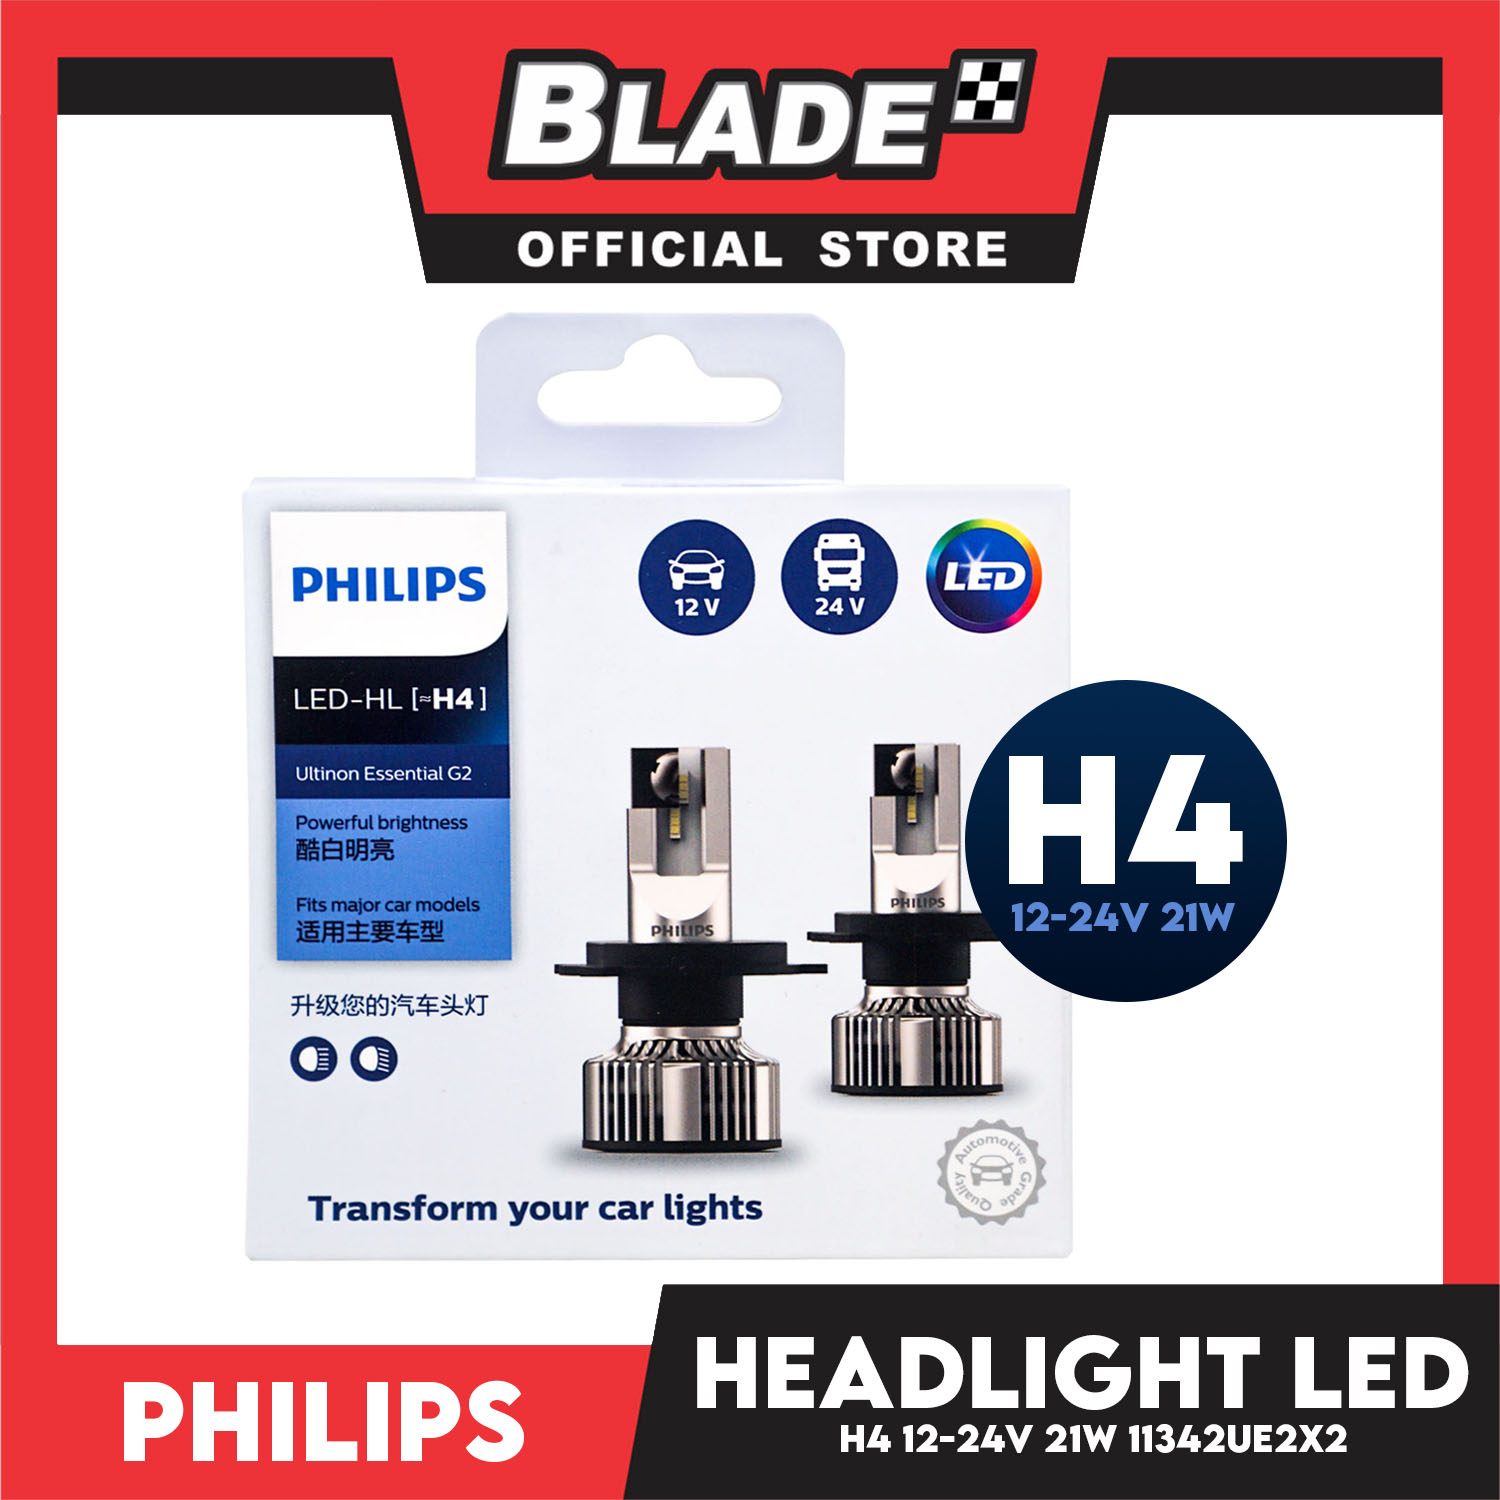 Philips H4 Ultinon Essentials G2 LED Headlight Globes 12V/24V (Pair) -  11342UE2X2 - Philips